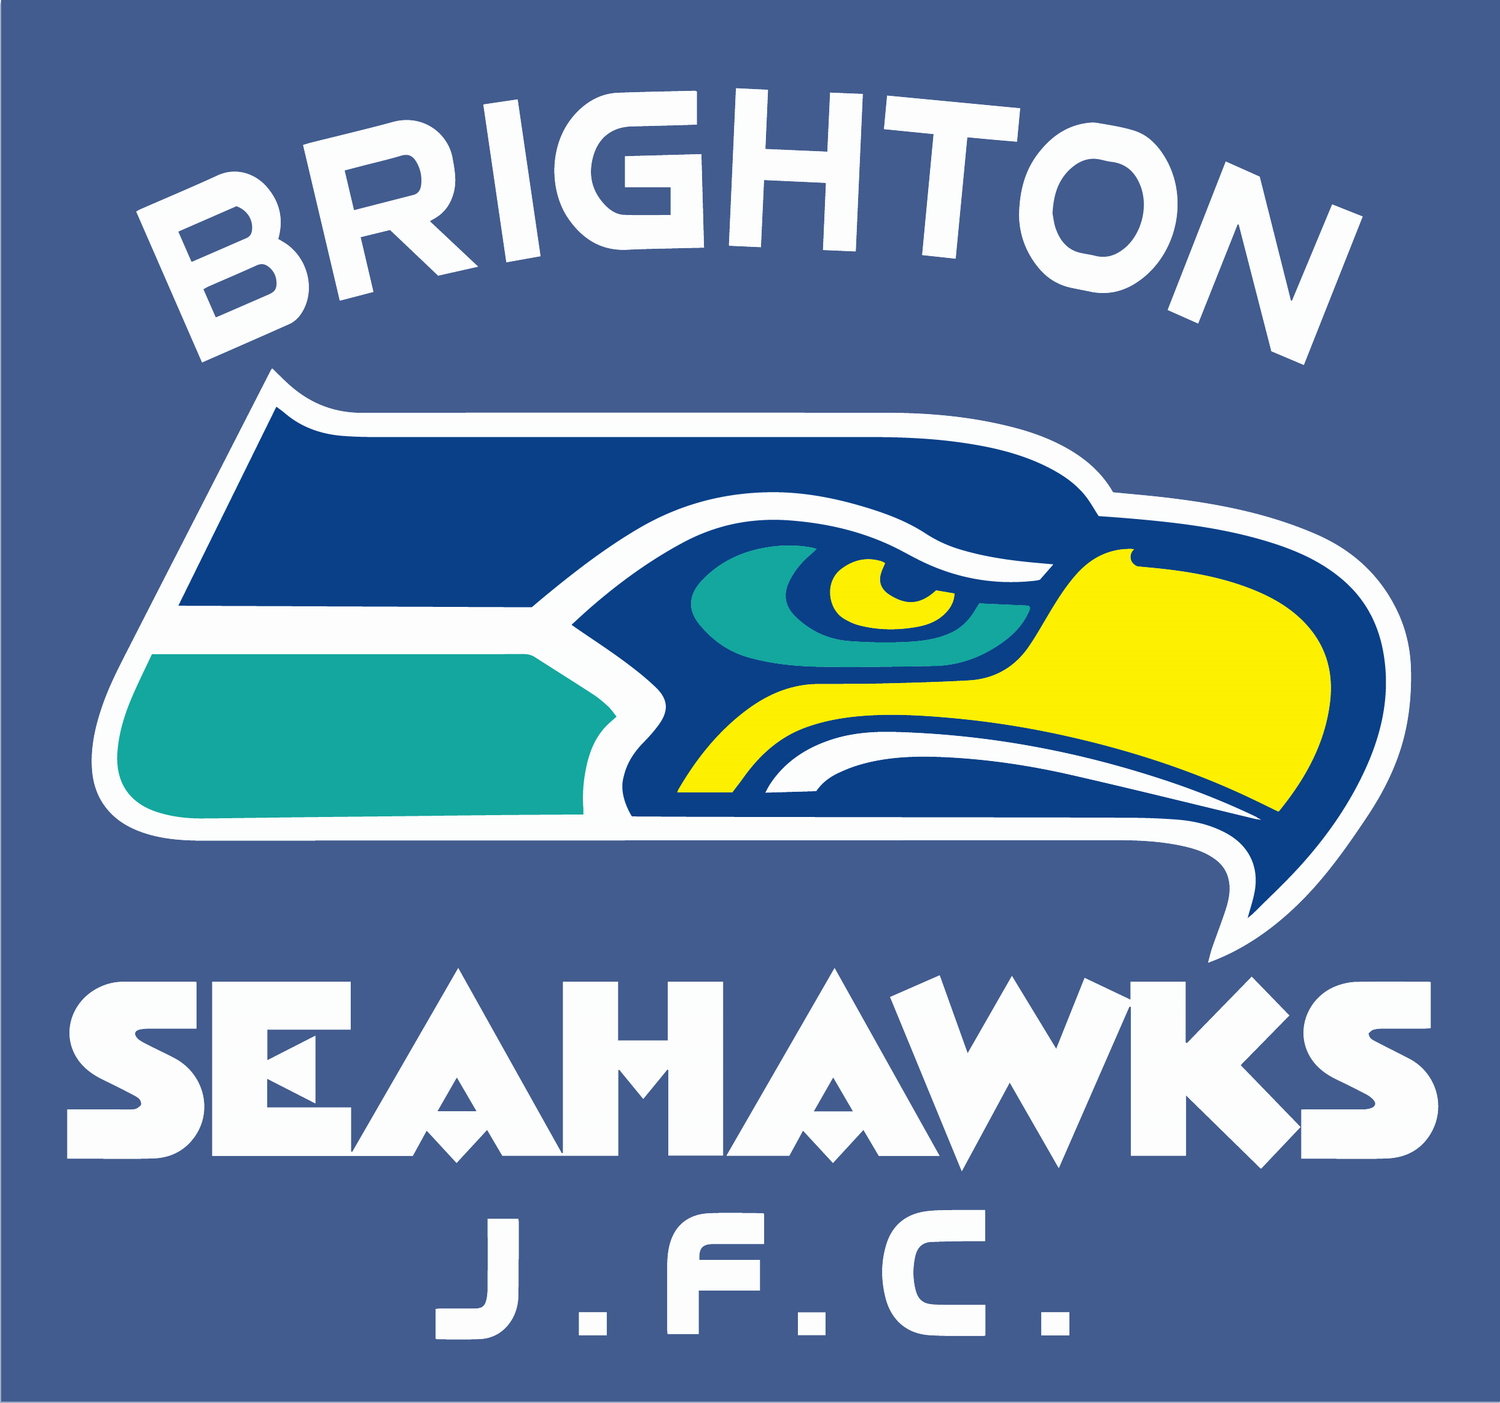 Brighton Seahawks JFC